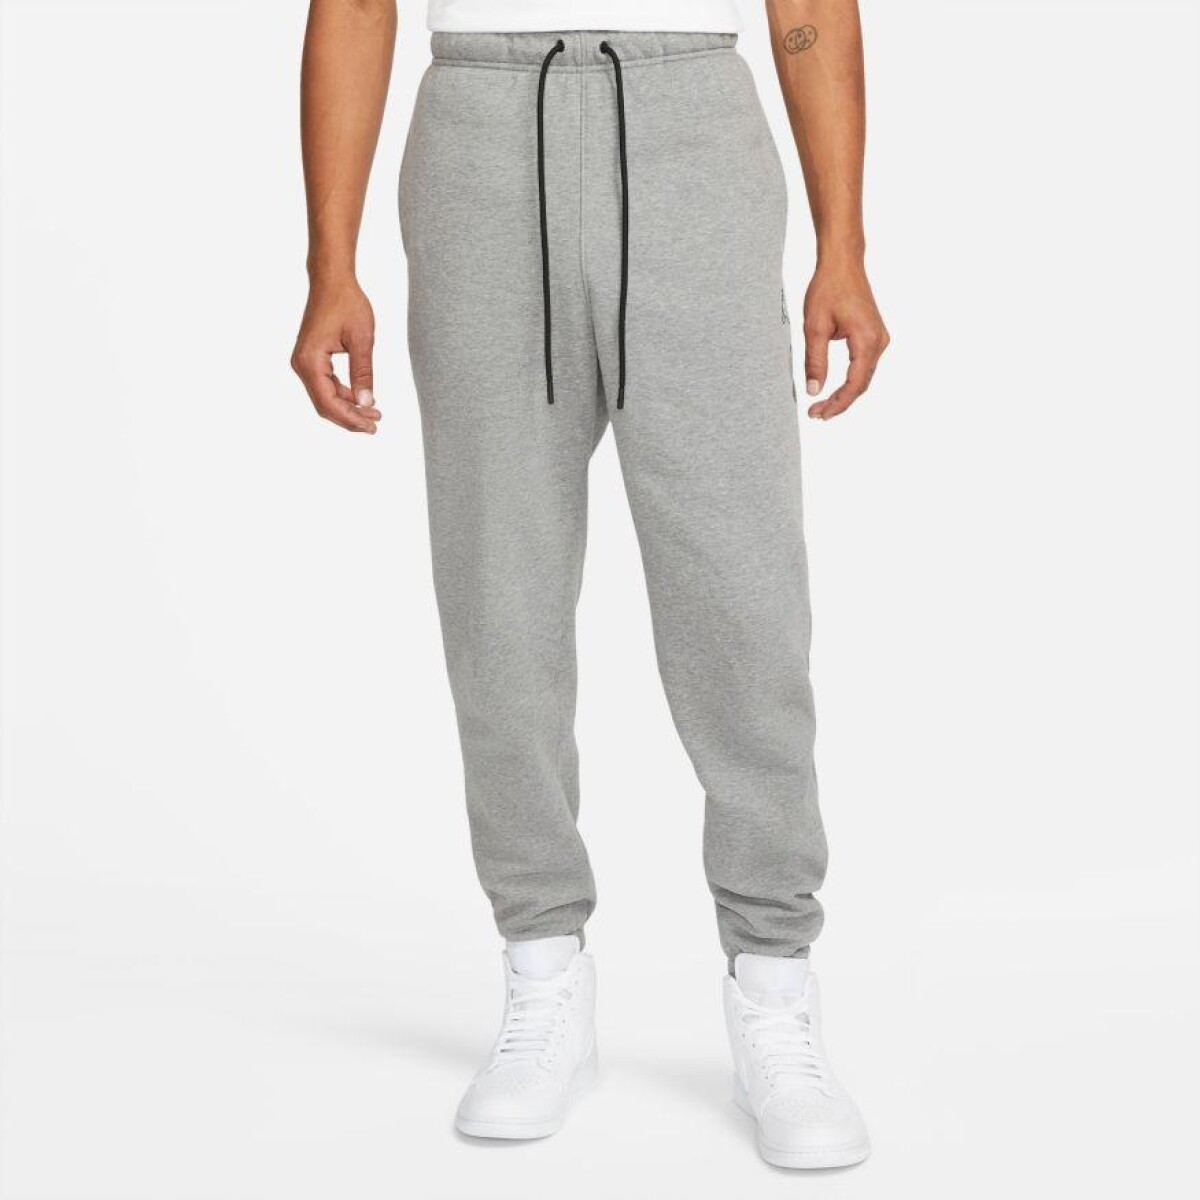 Pantalon Nike Moda Hombre Ess Flc Pant Carbon Heather - Color Único 